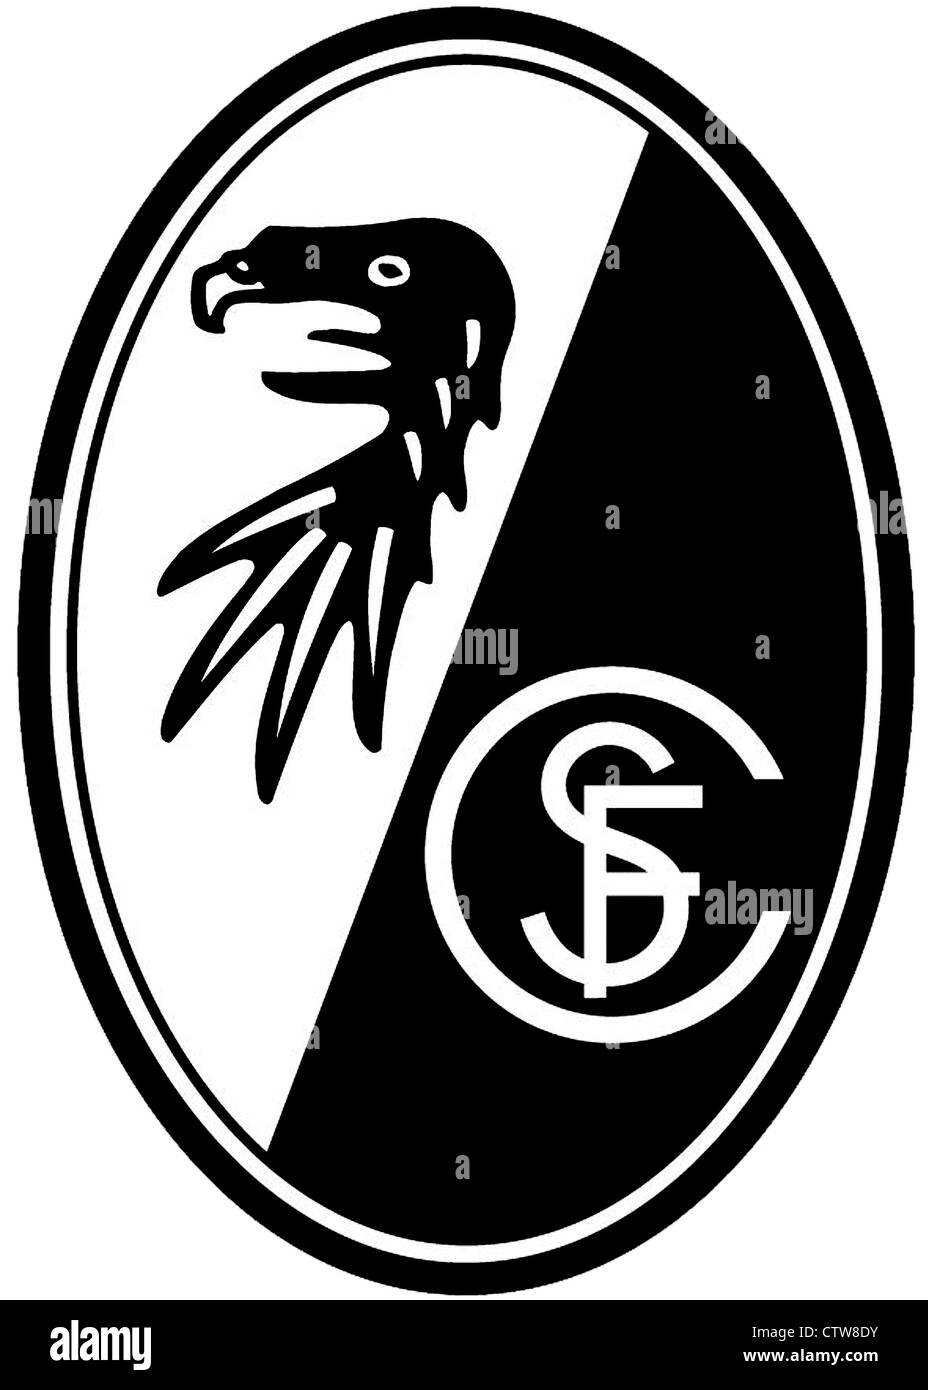 Logo de l'équipe allemande de football SC Freiburg. Banque D'Images